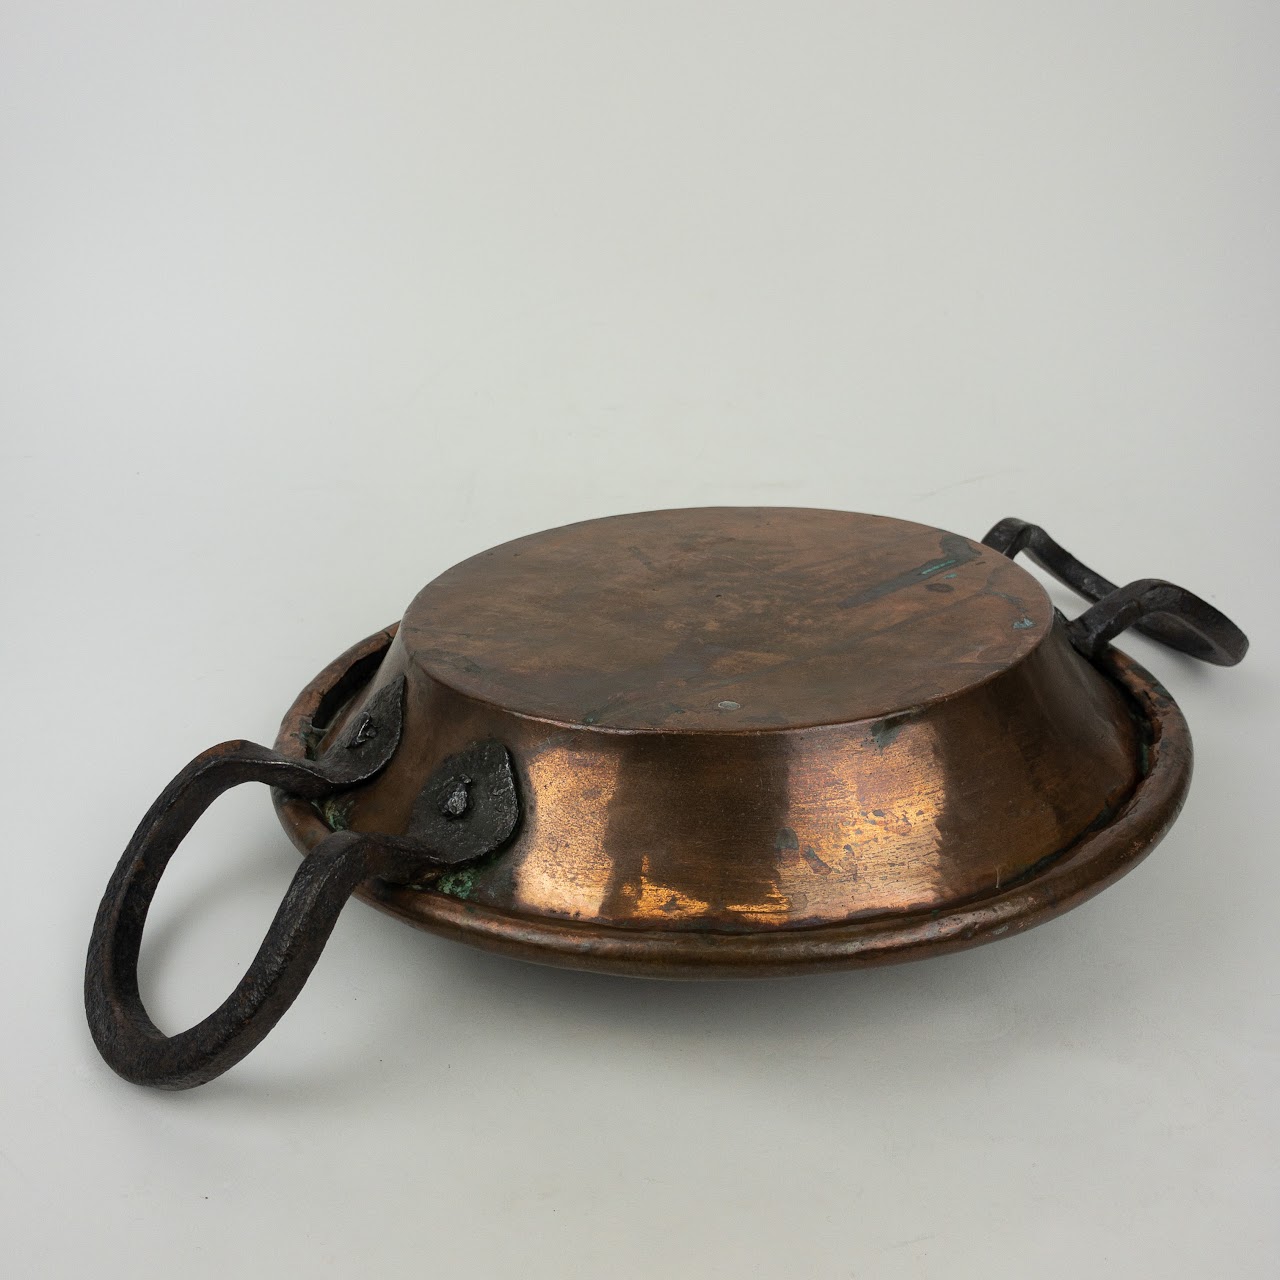 Hammered Copper Vintage Frying Pan